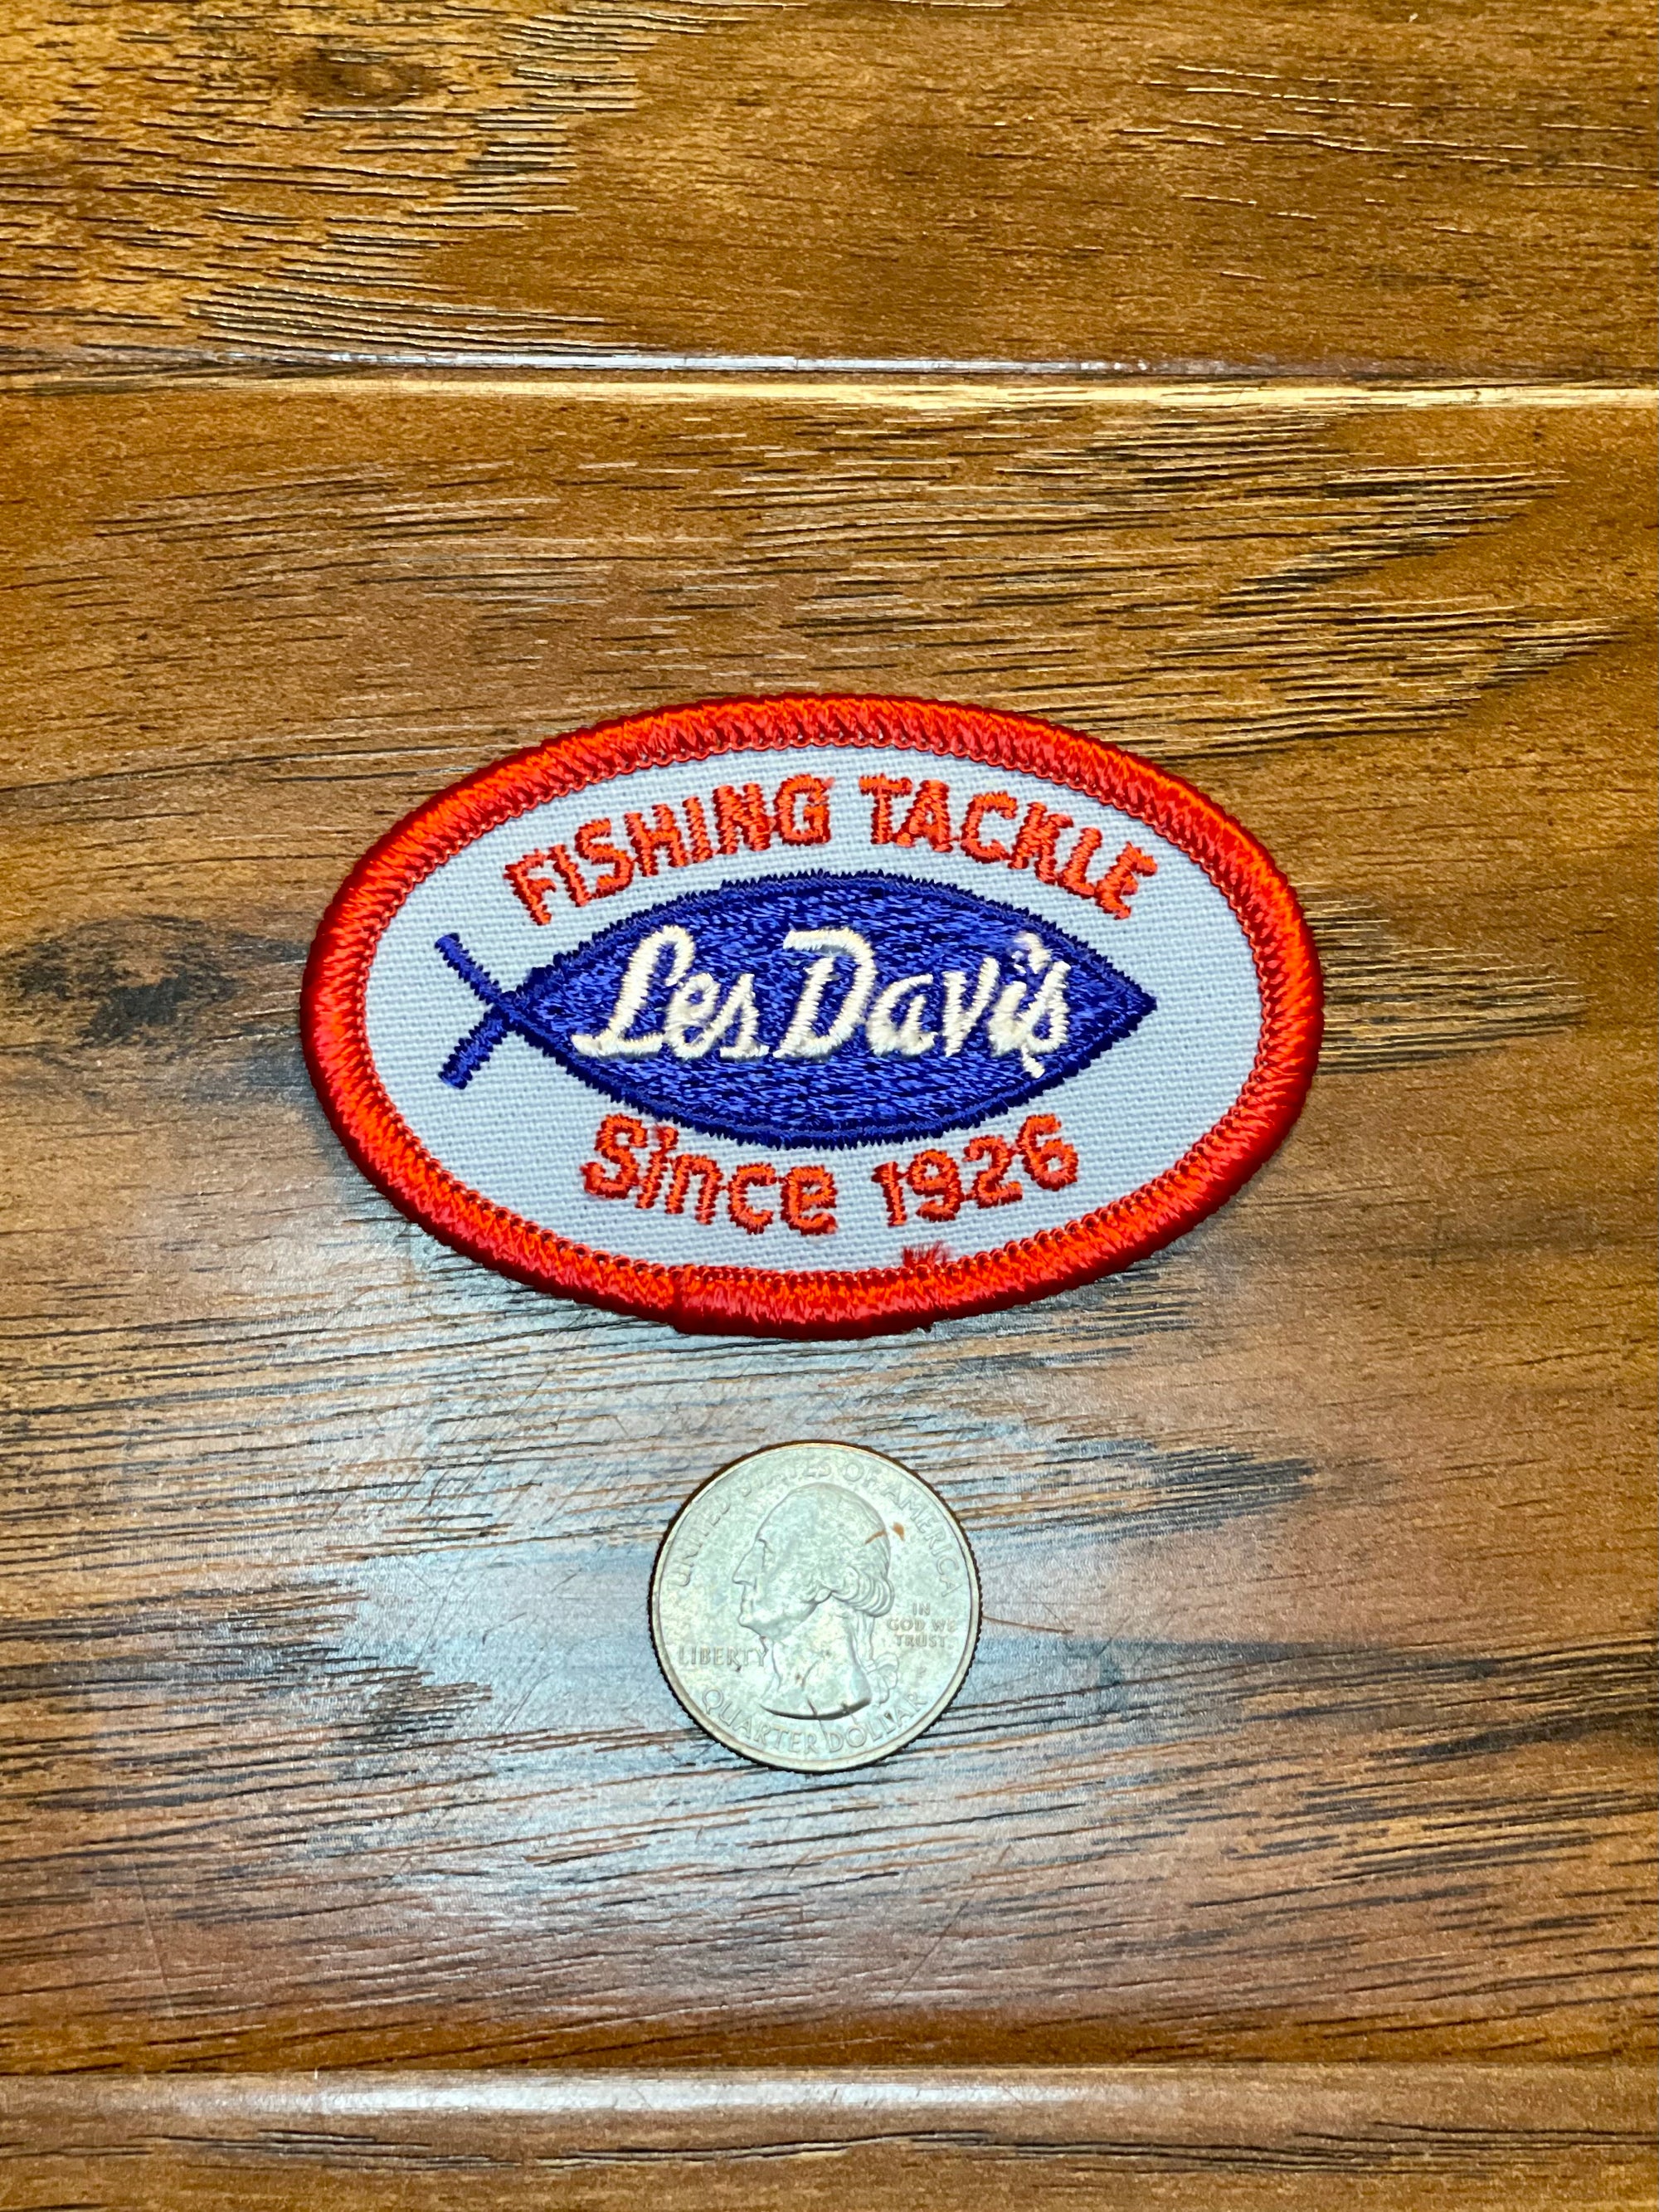 Vintage Les Davis Fishing Tackle